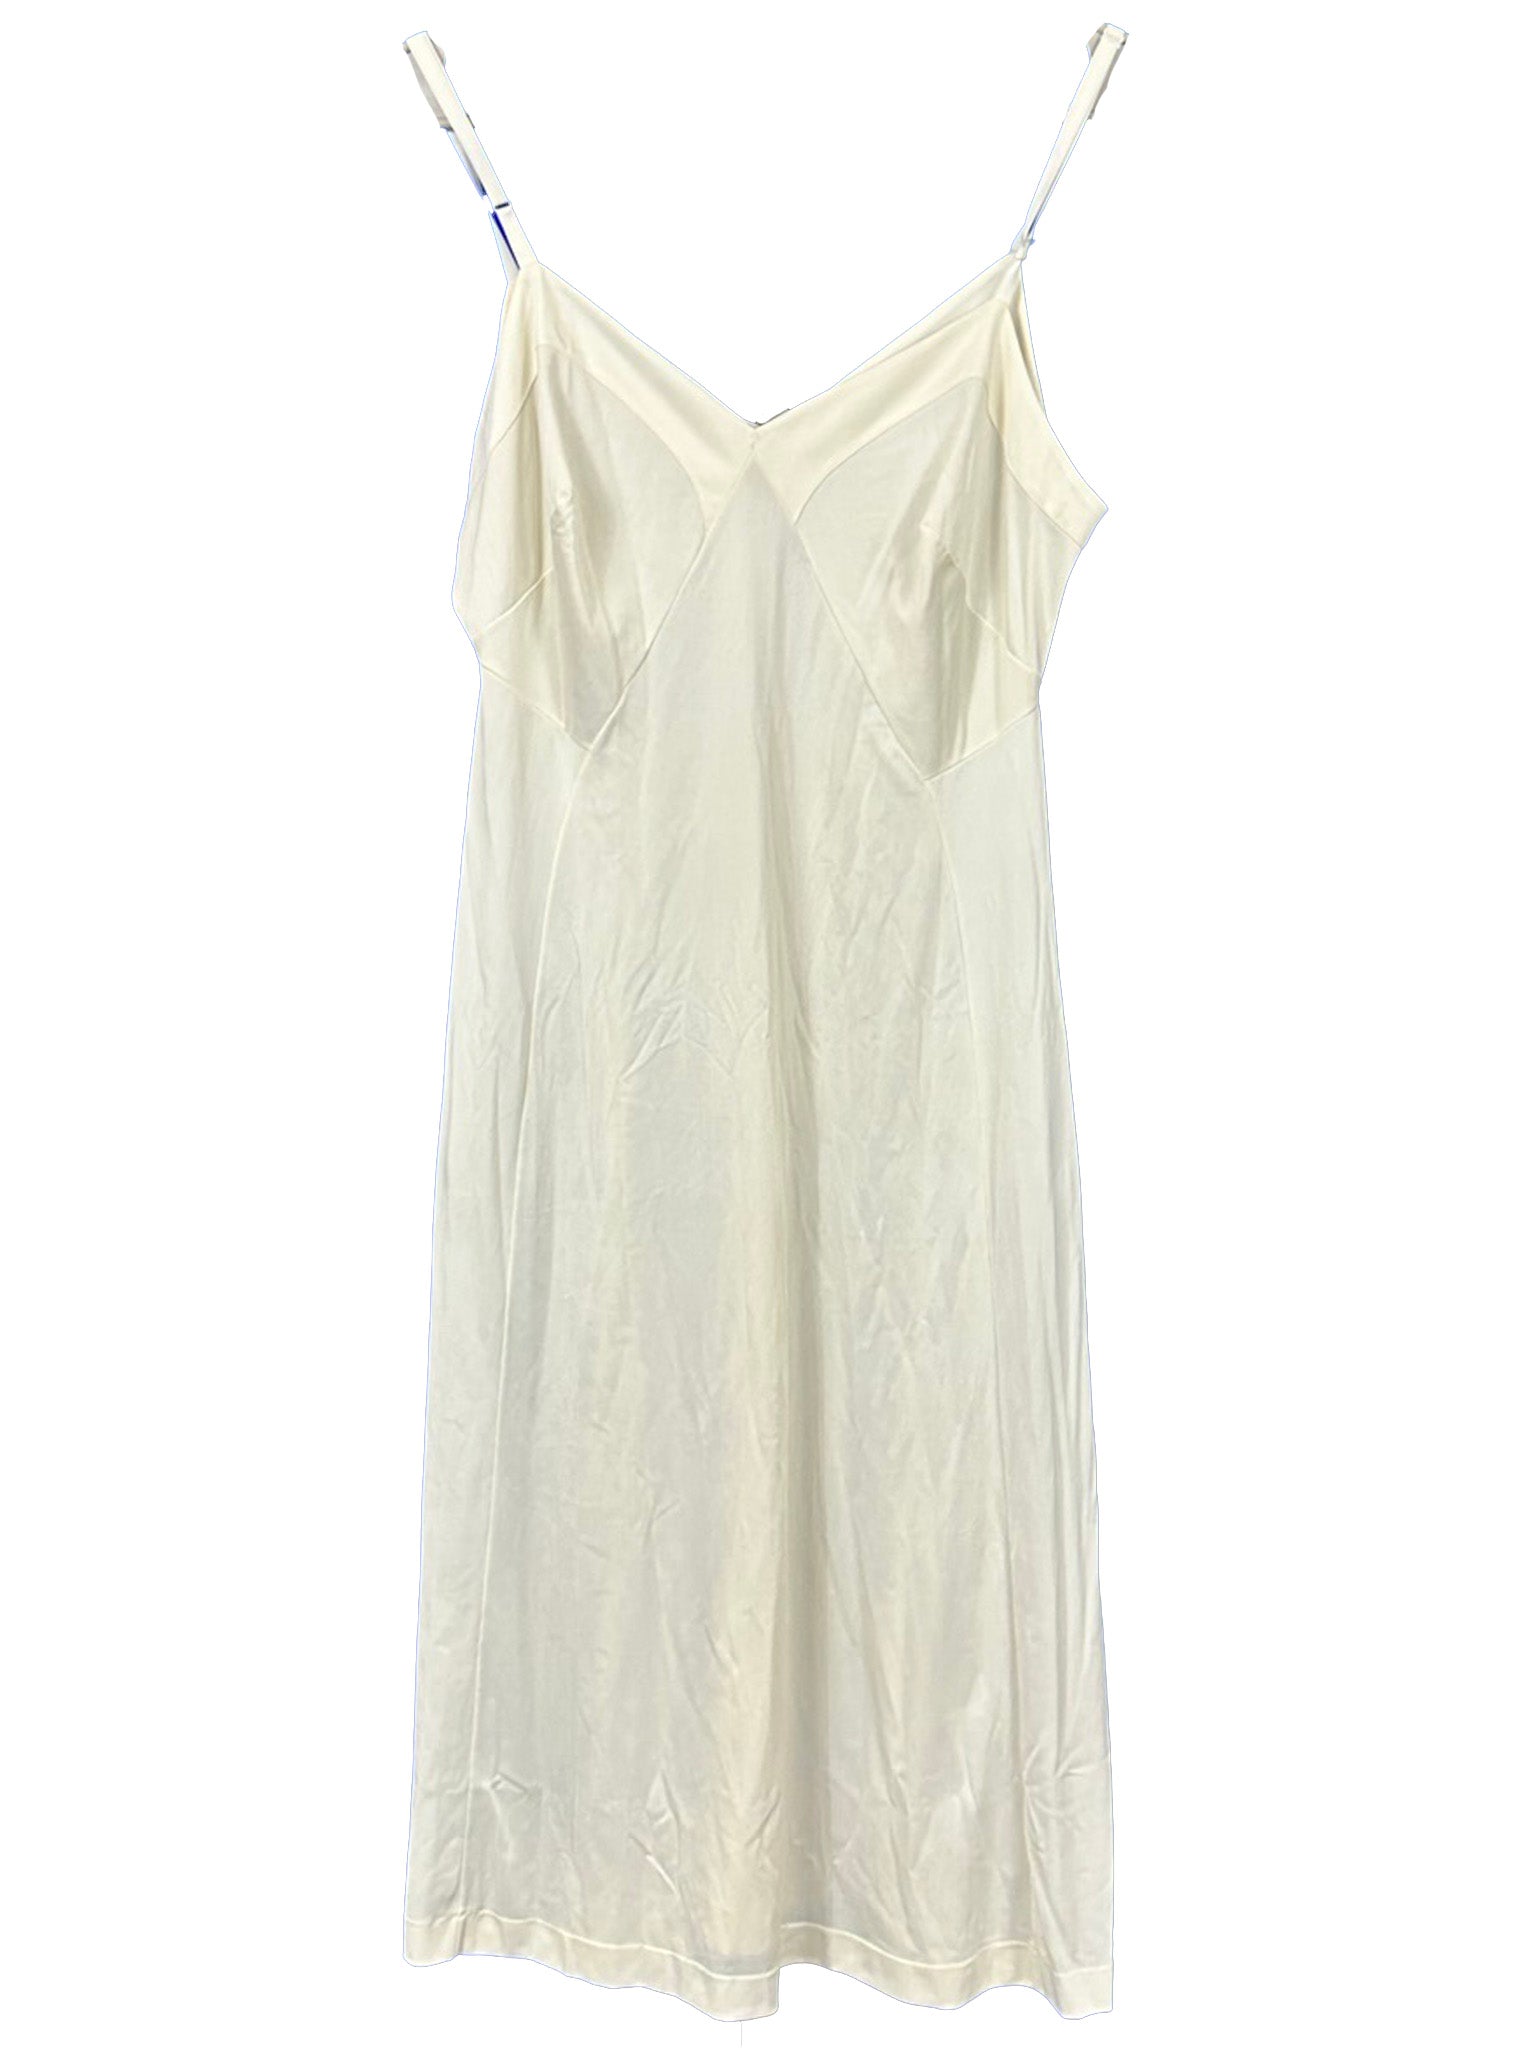 Vintage White Slip Dress Women's Size Unknown (B)